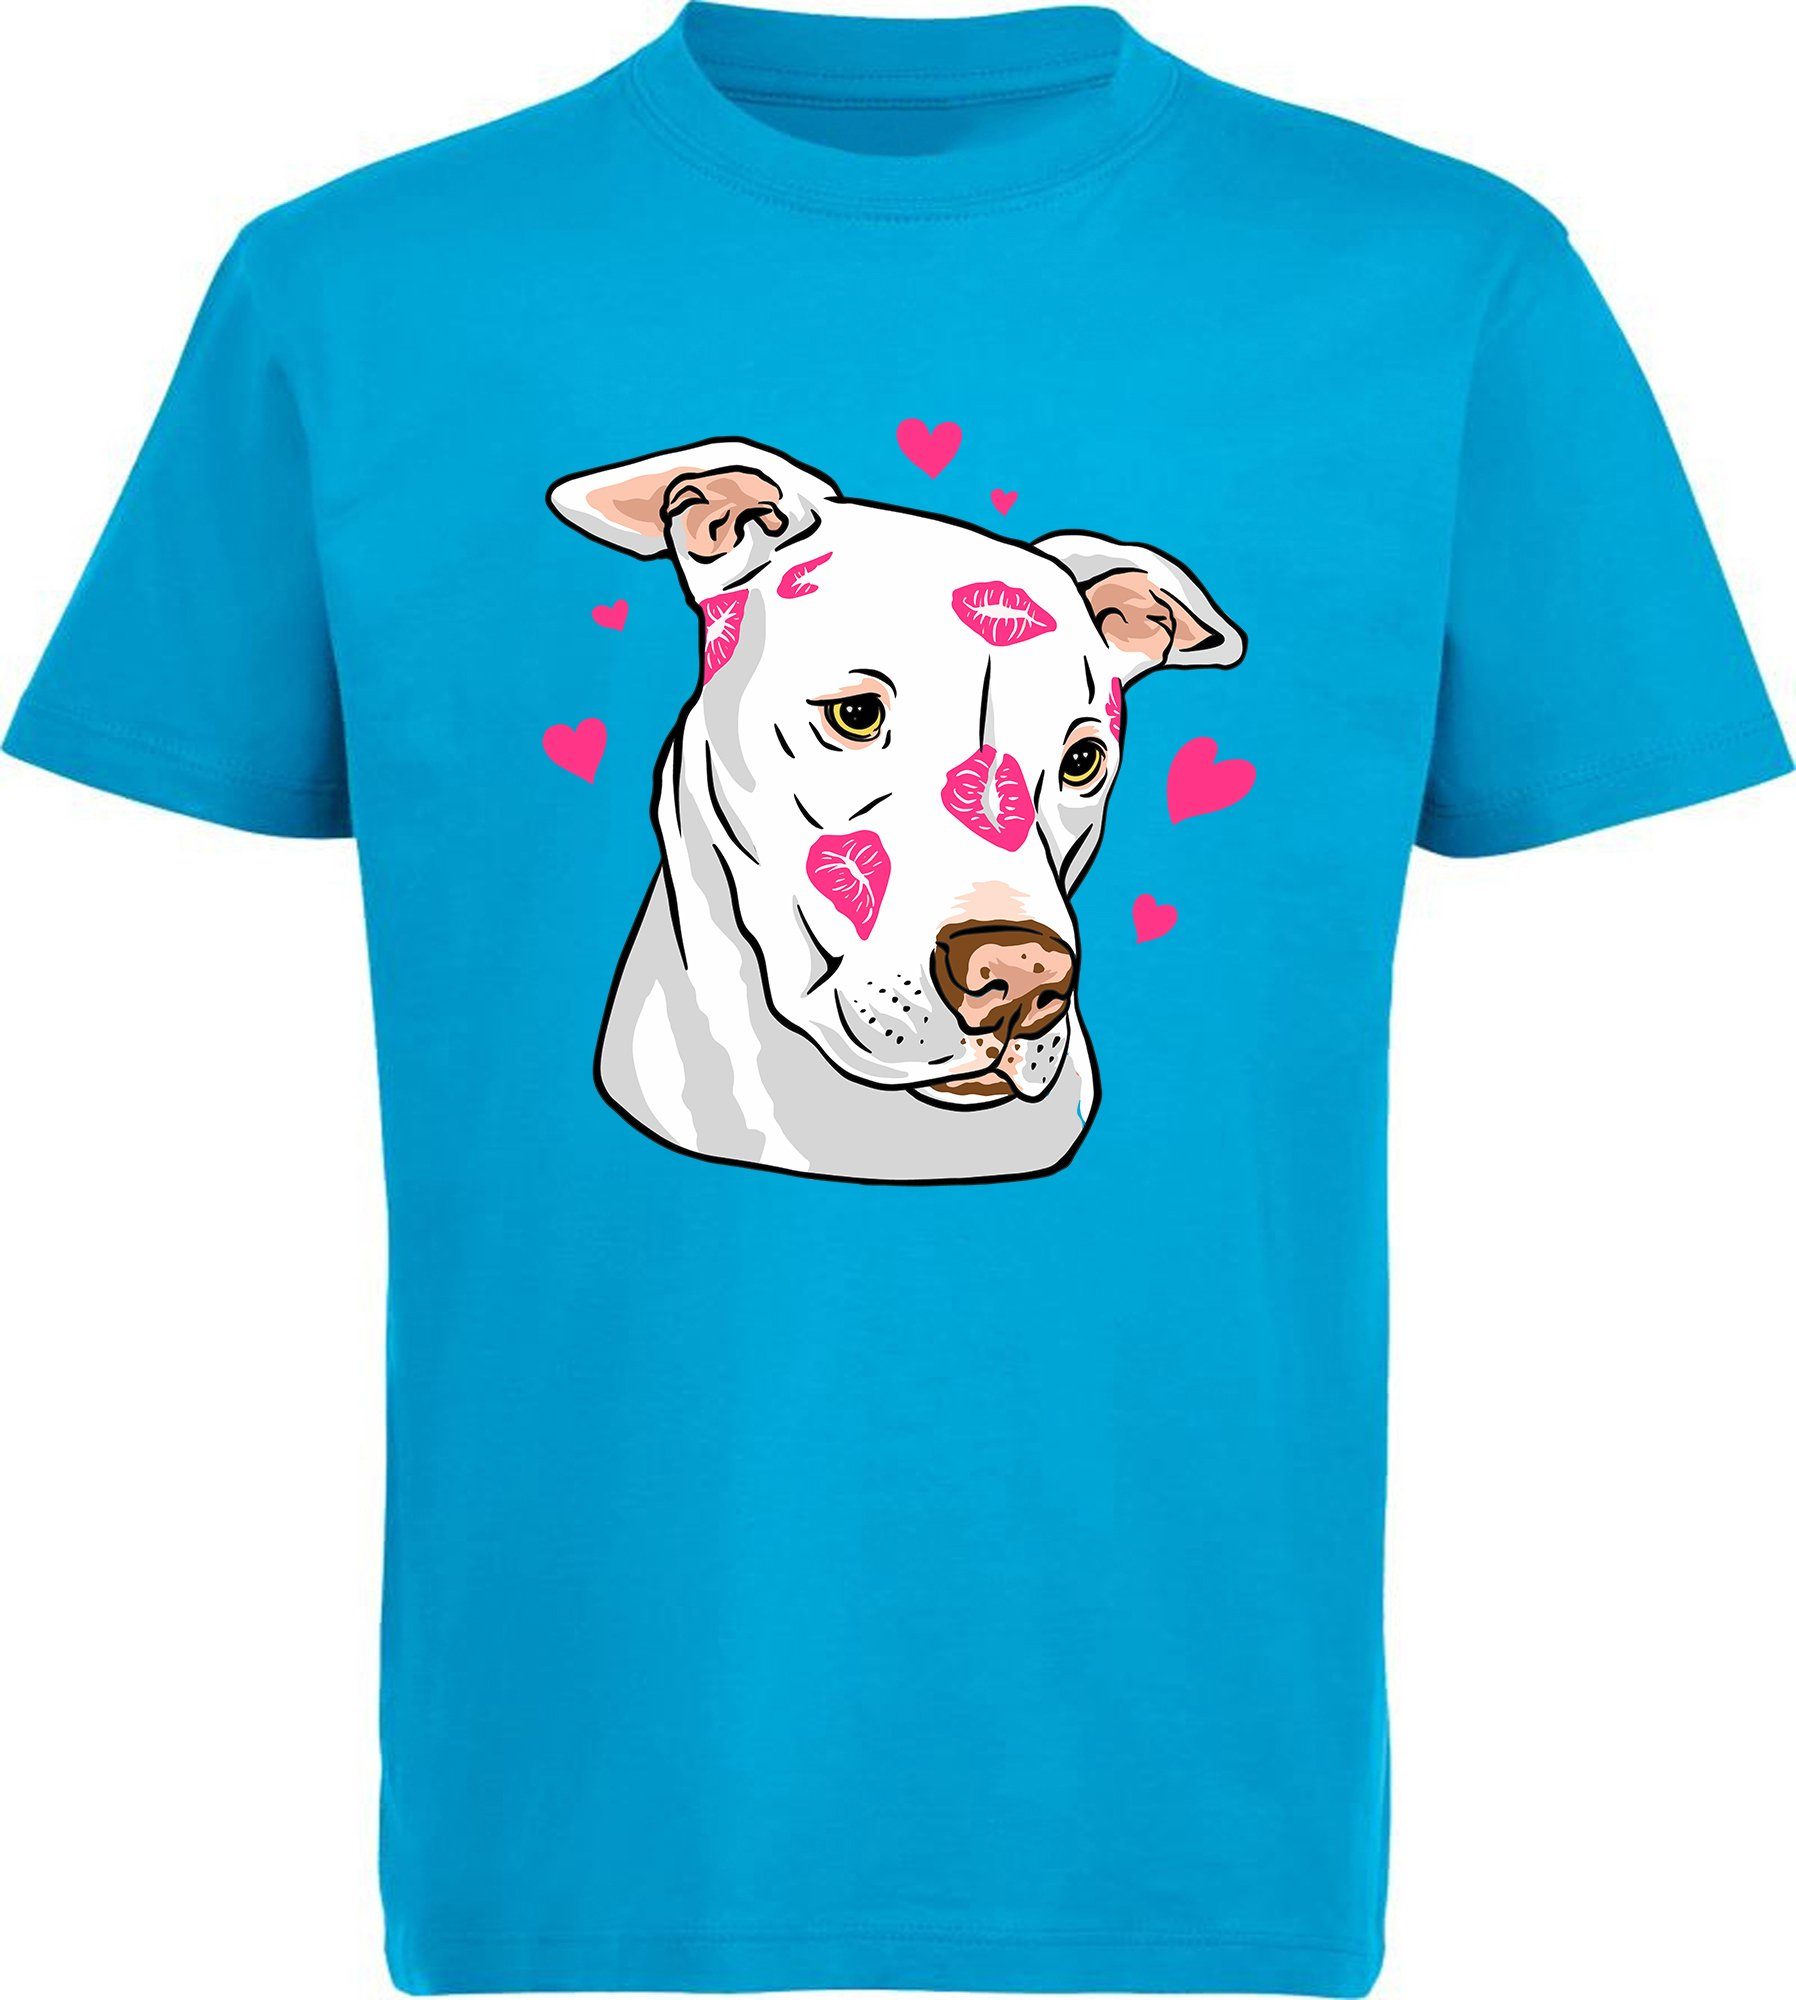 MyDesign24 Print-Shirt bedrucktes Kinder Hunde T-Shirt - Pitbull mit Herzen Baumwollshirt mit Aufdruck, i229 aqua blau | T-Shirts